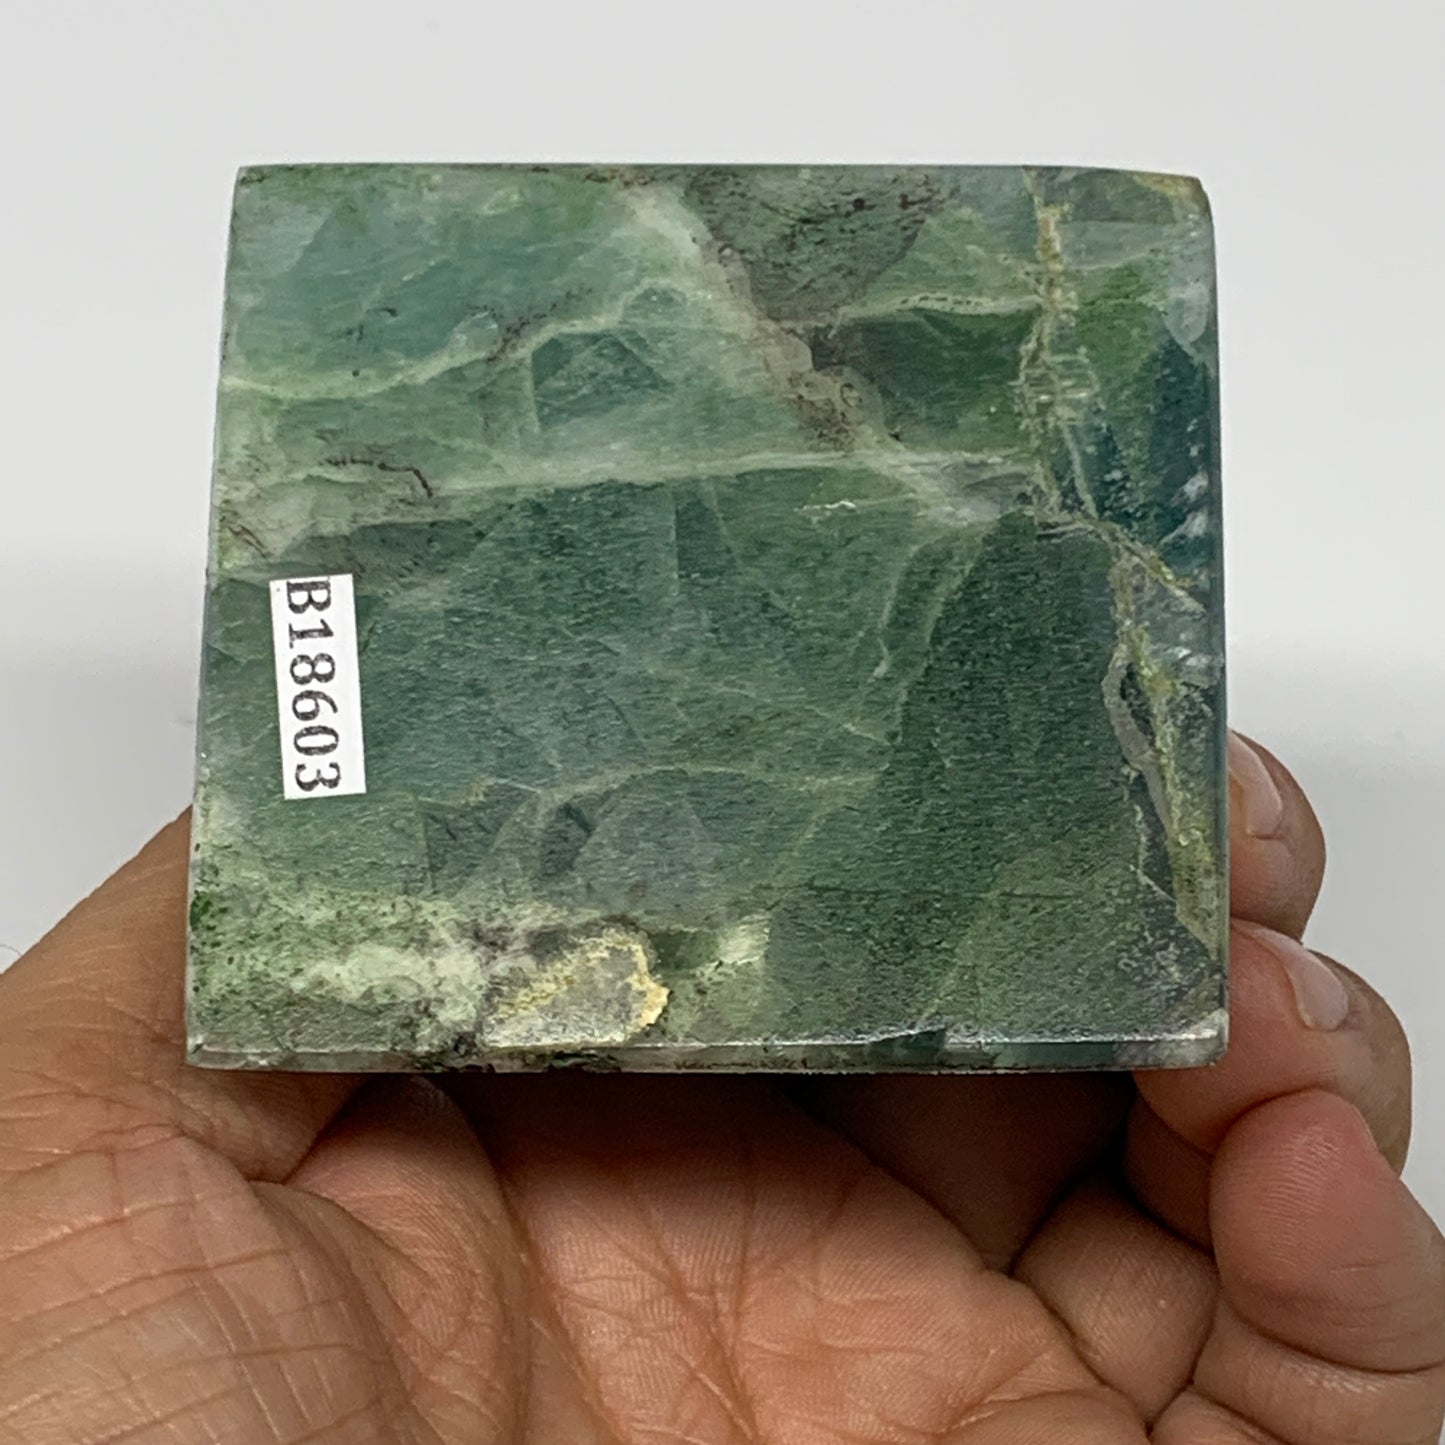 222.6g, 2"x2.4"x2.3" Natural Green Fluorite Pyramid Crystal Gemstone @Mexico, B1